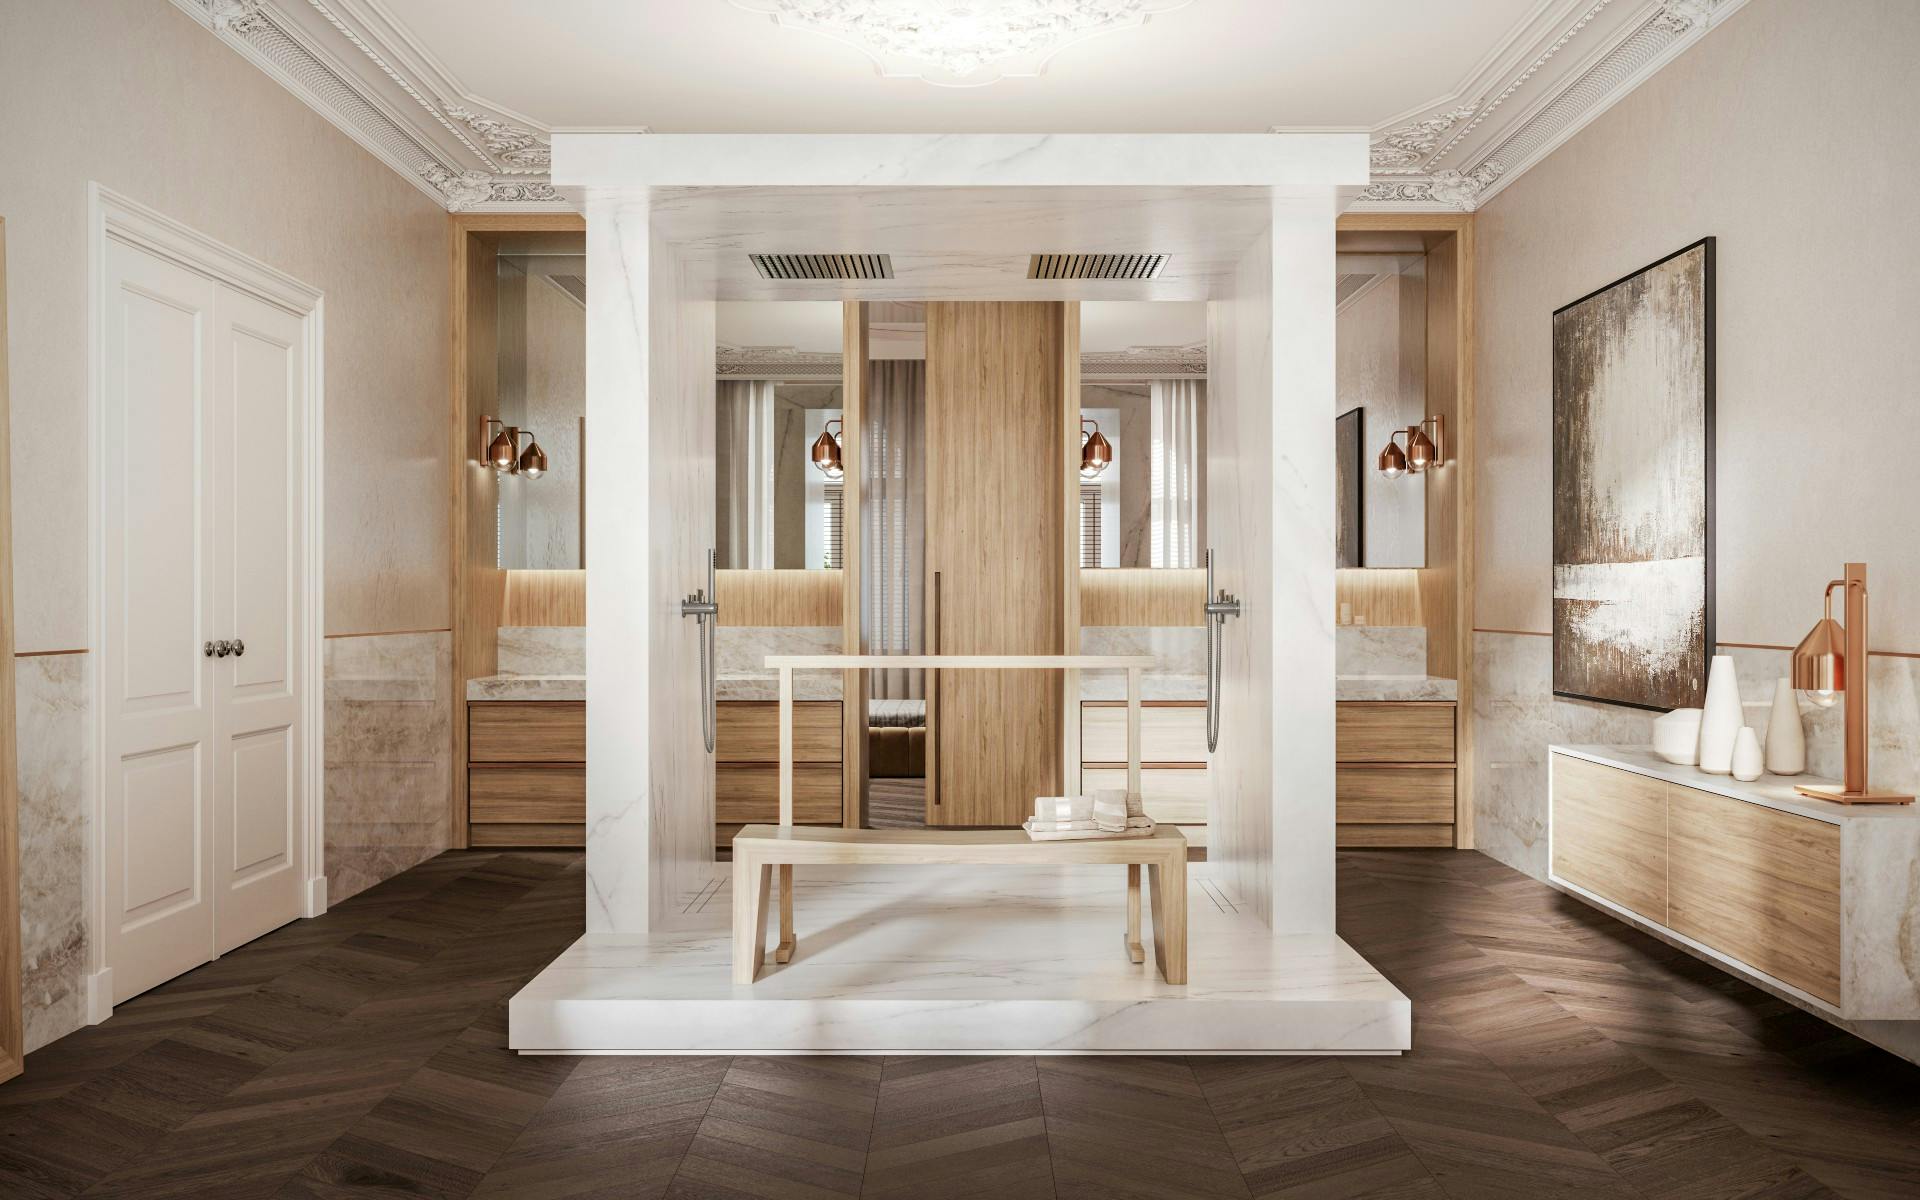 Imagem número 32 da actual secção de The Palazzo: the bathroom designed by Remy Meijers in which the shower takes centre stage da Cosentino Portugal